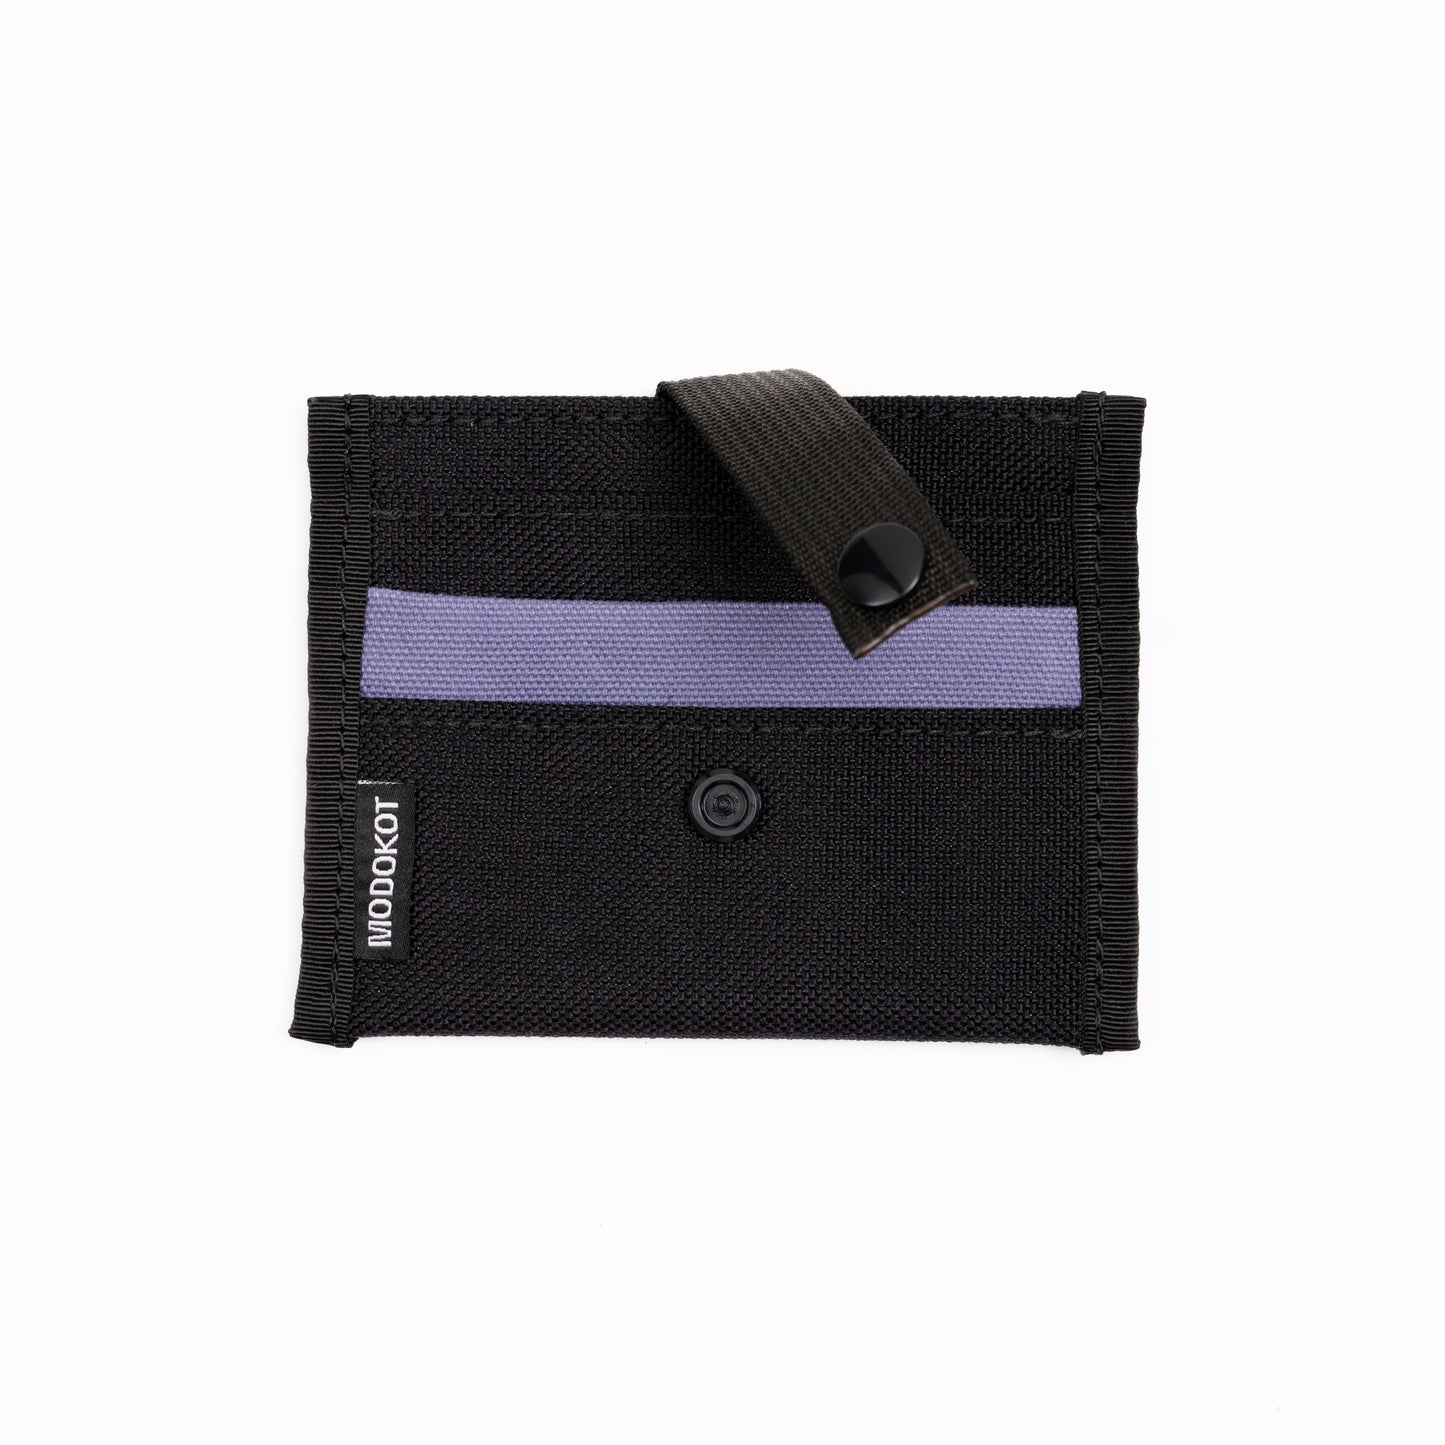 The Slim Wallet - Carhartt Purple